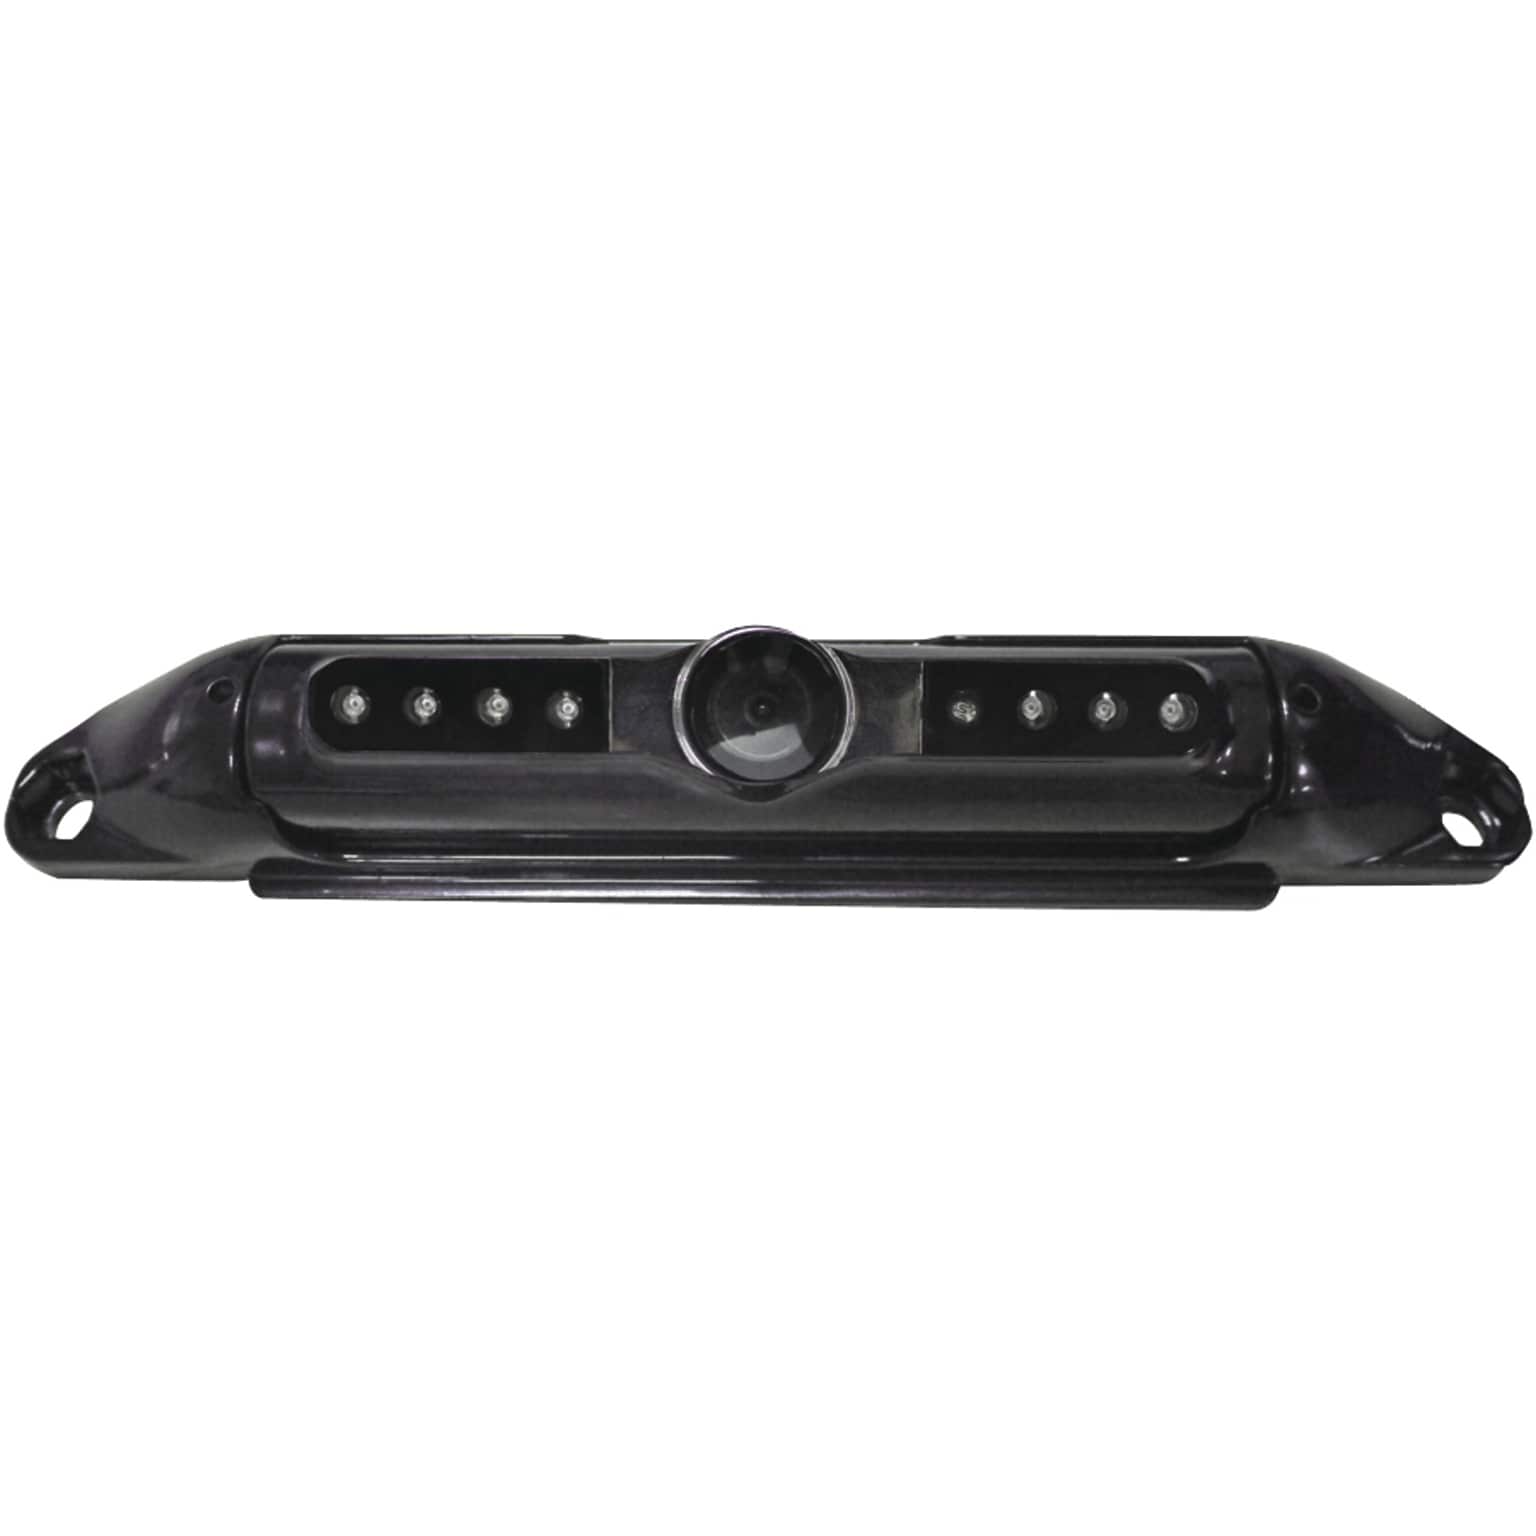 Boyo Vision Vtl420Cir Bar-Type 140° License Plate Camera with Ire Night Vision & Parking-Guide Lines, Black (BYOVTL420CIRDS)